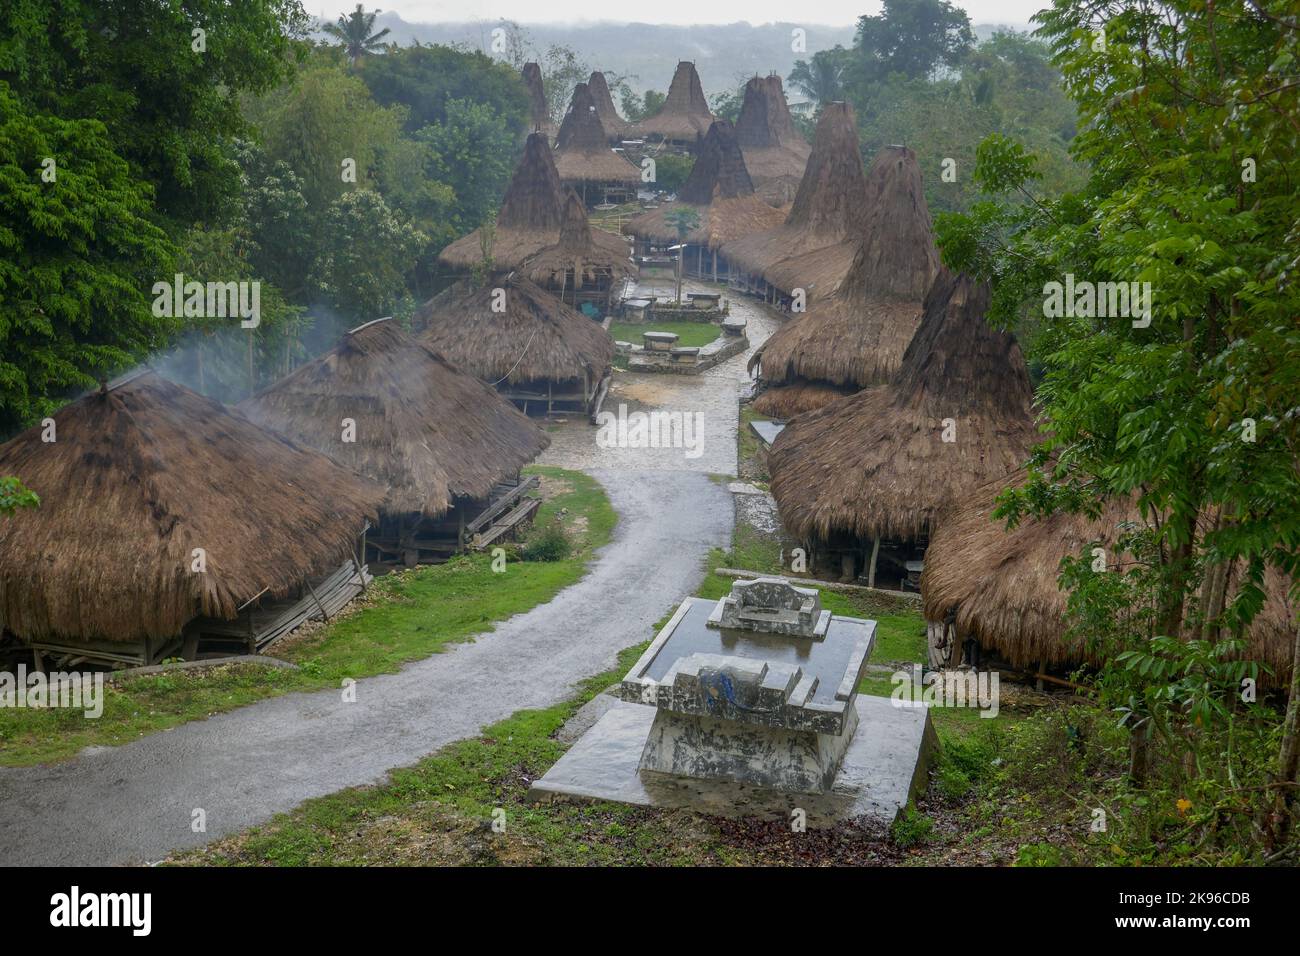 View of beautiful Prai Ijing traditional village on a rainy overcast day, Waikabubak, Sumba island, East Nusa Tenggara, Indonesia Stock Photo